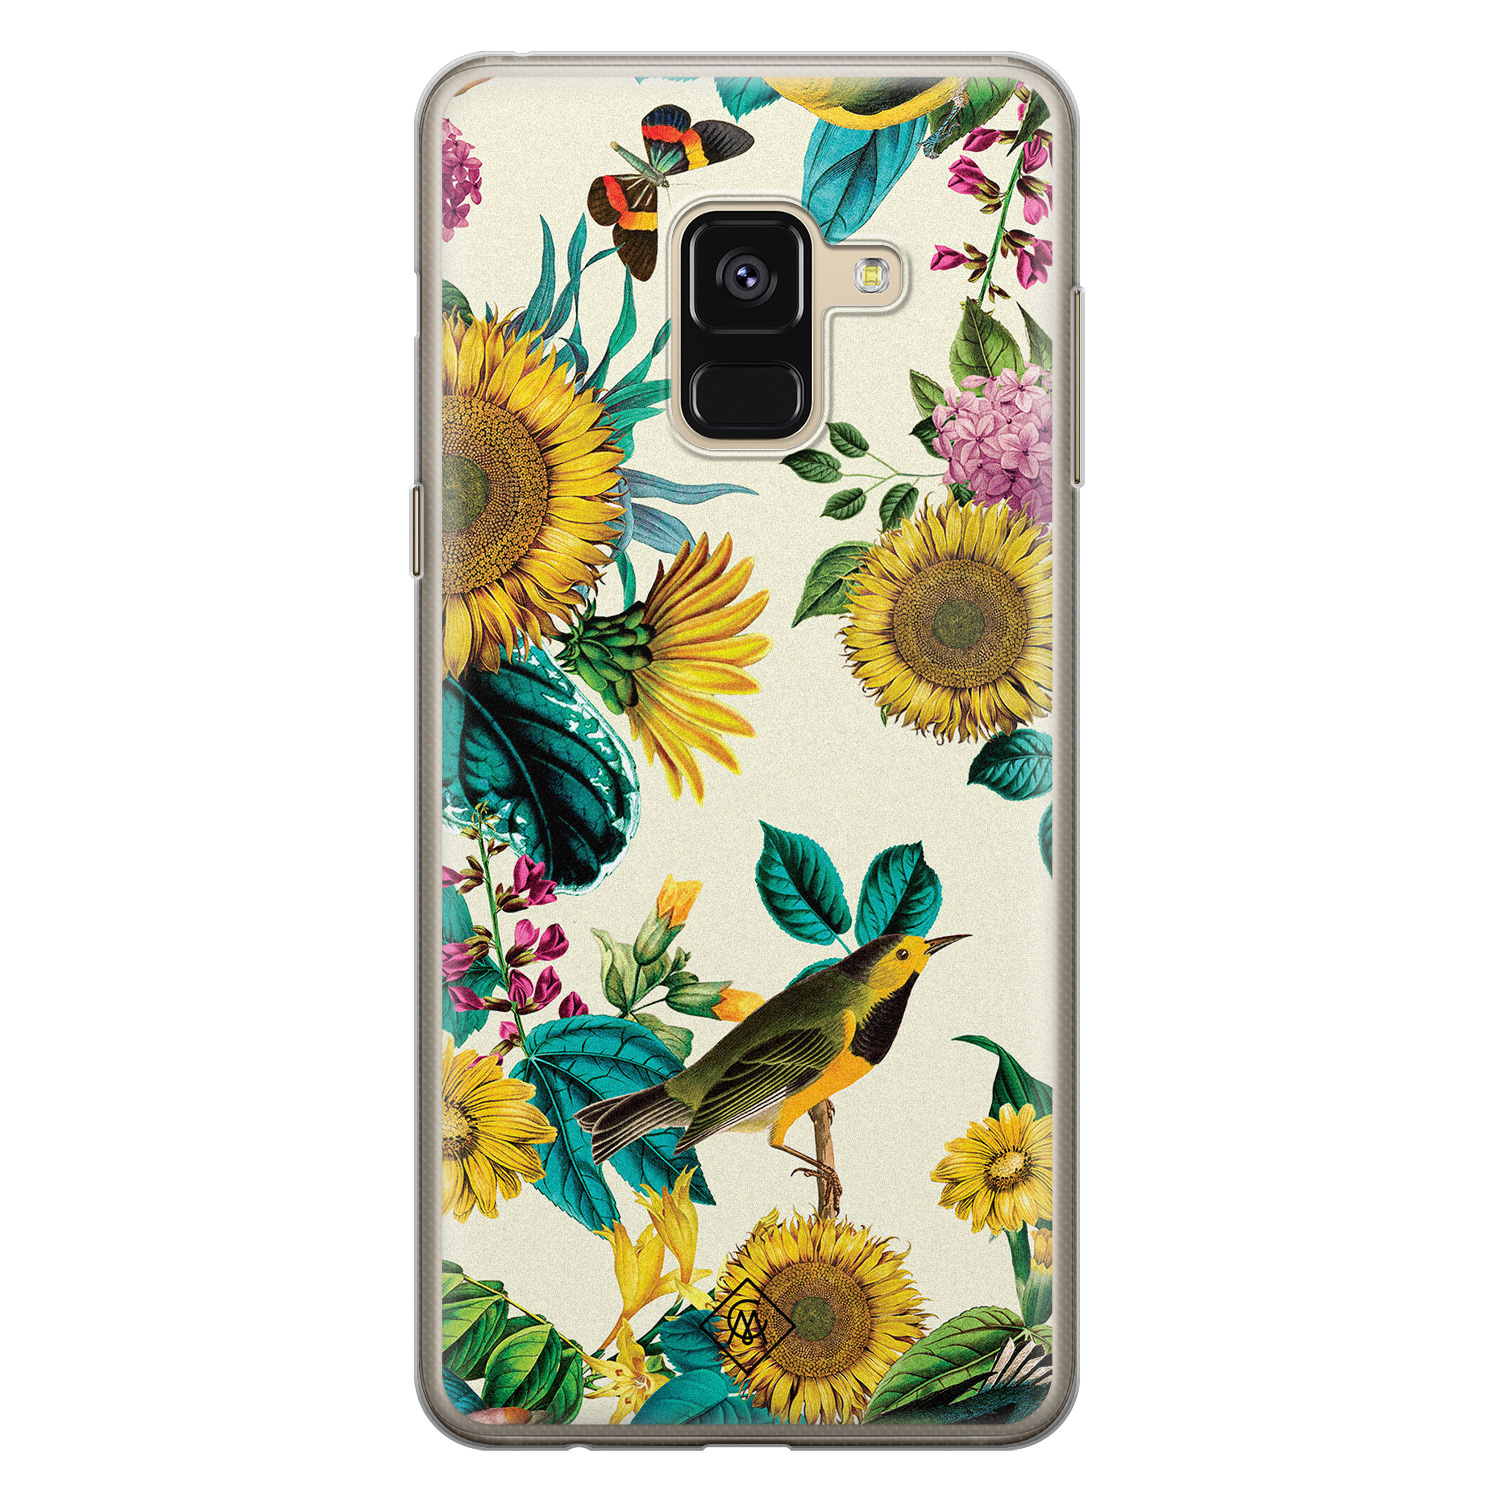 onderzeeër Onenigheid Oorzaak Samsung Galaxy A8 (2018) siliconen hoesje - Sunflowers - Casimoda.nl